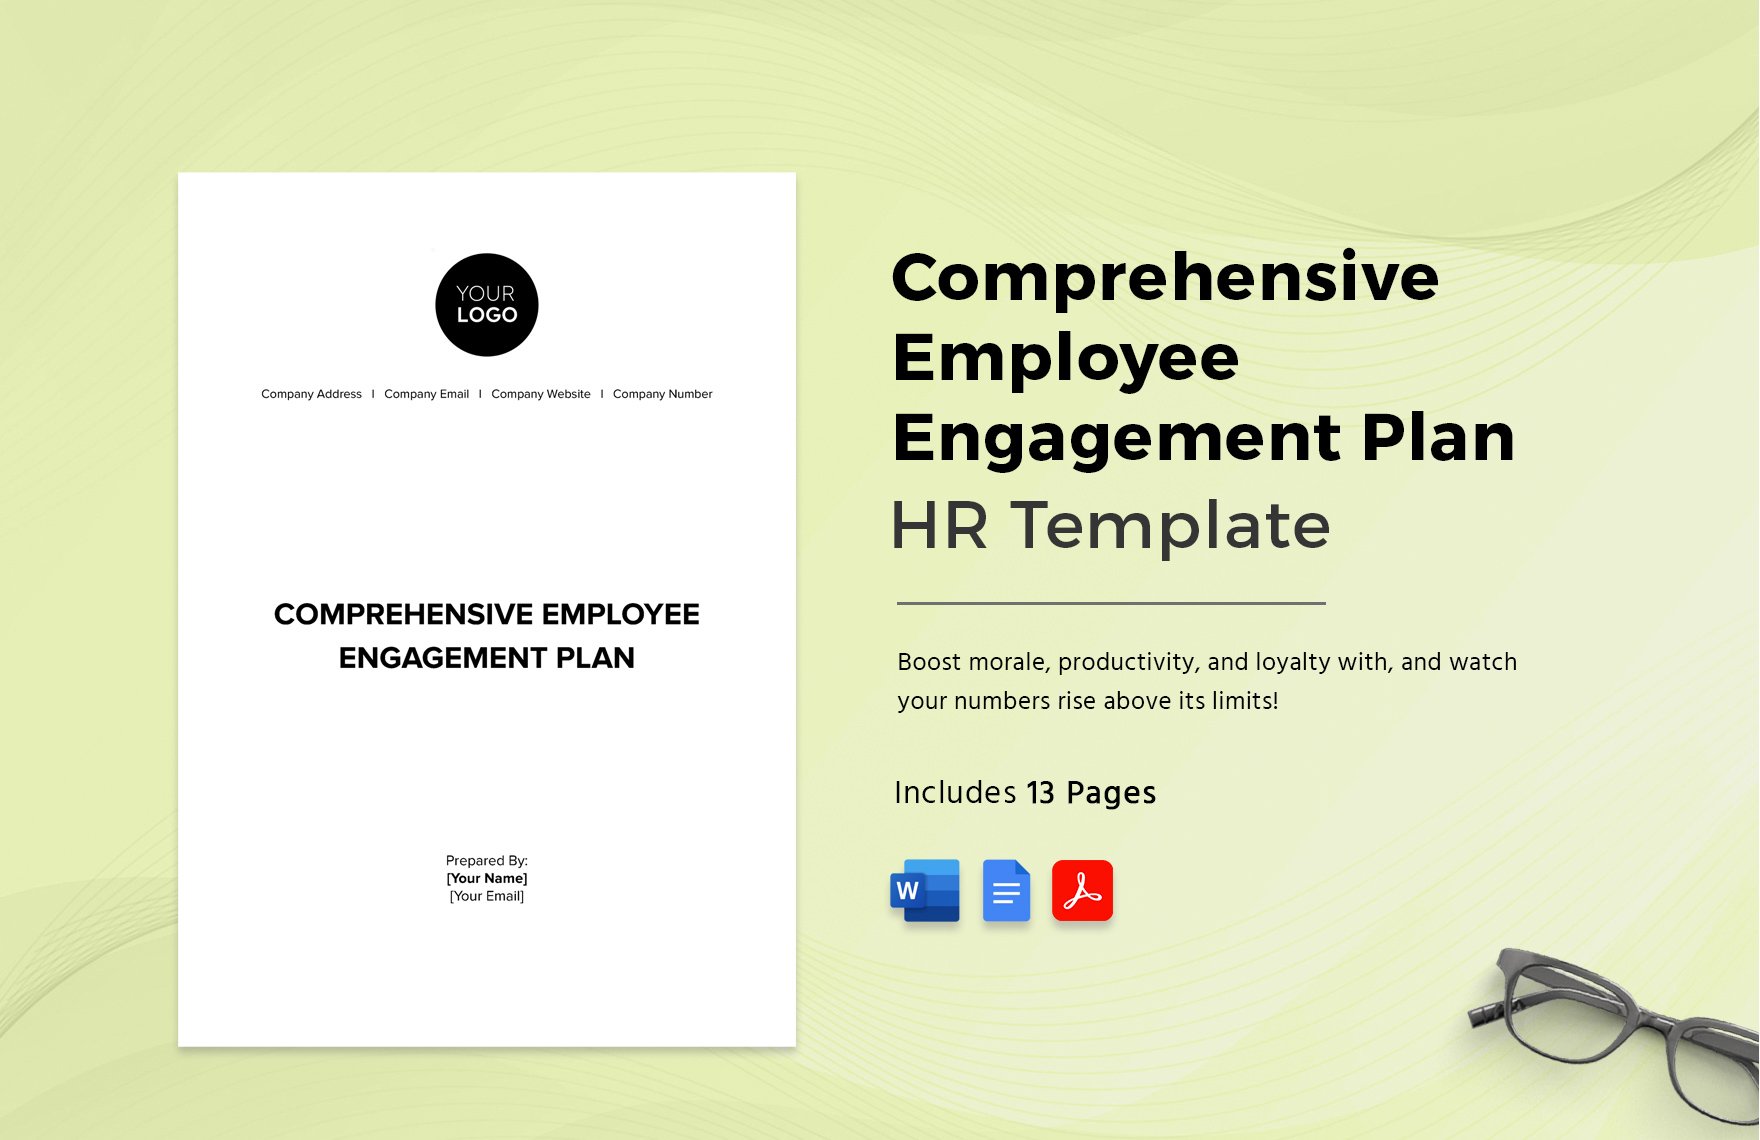 Comprehensive Employee Engagement Plan HR Template